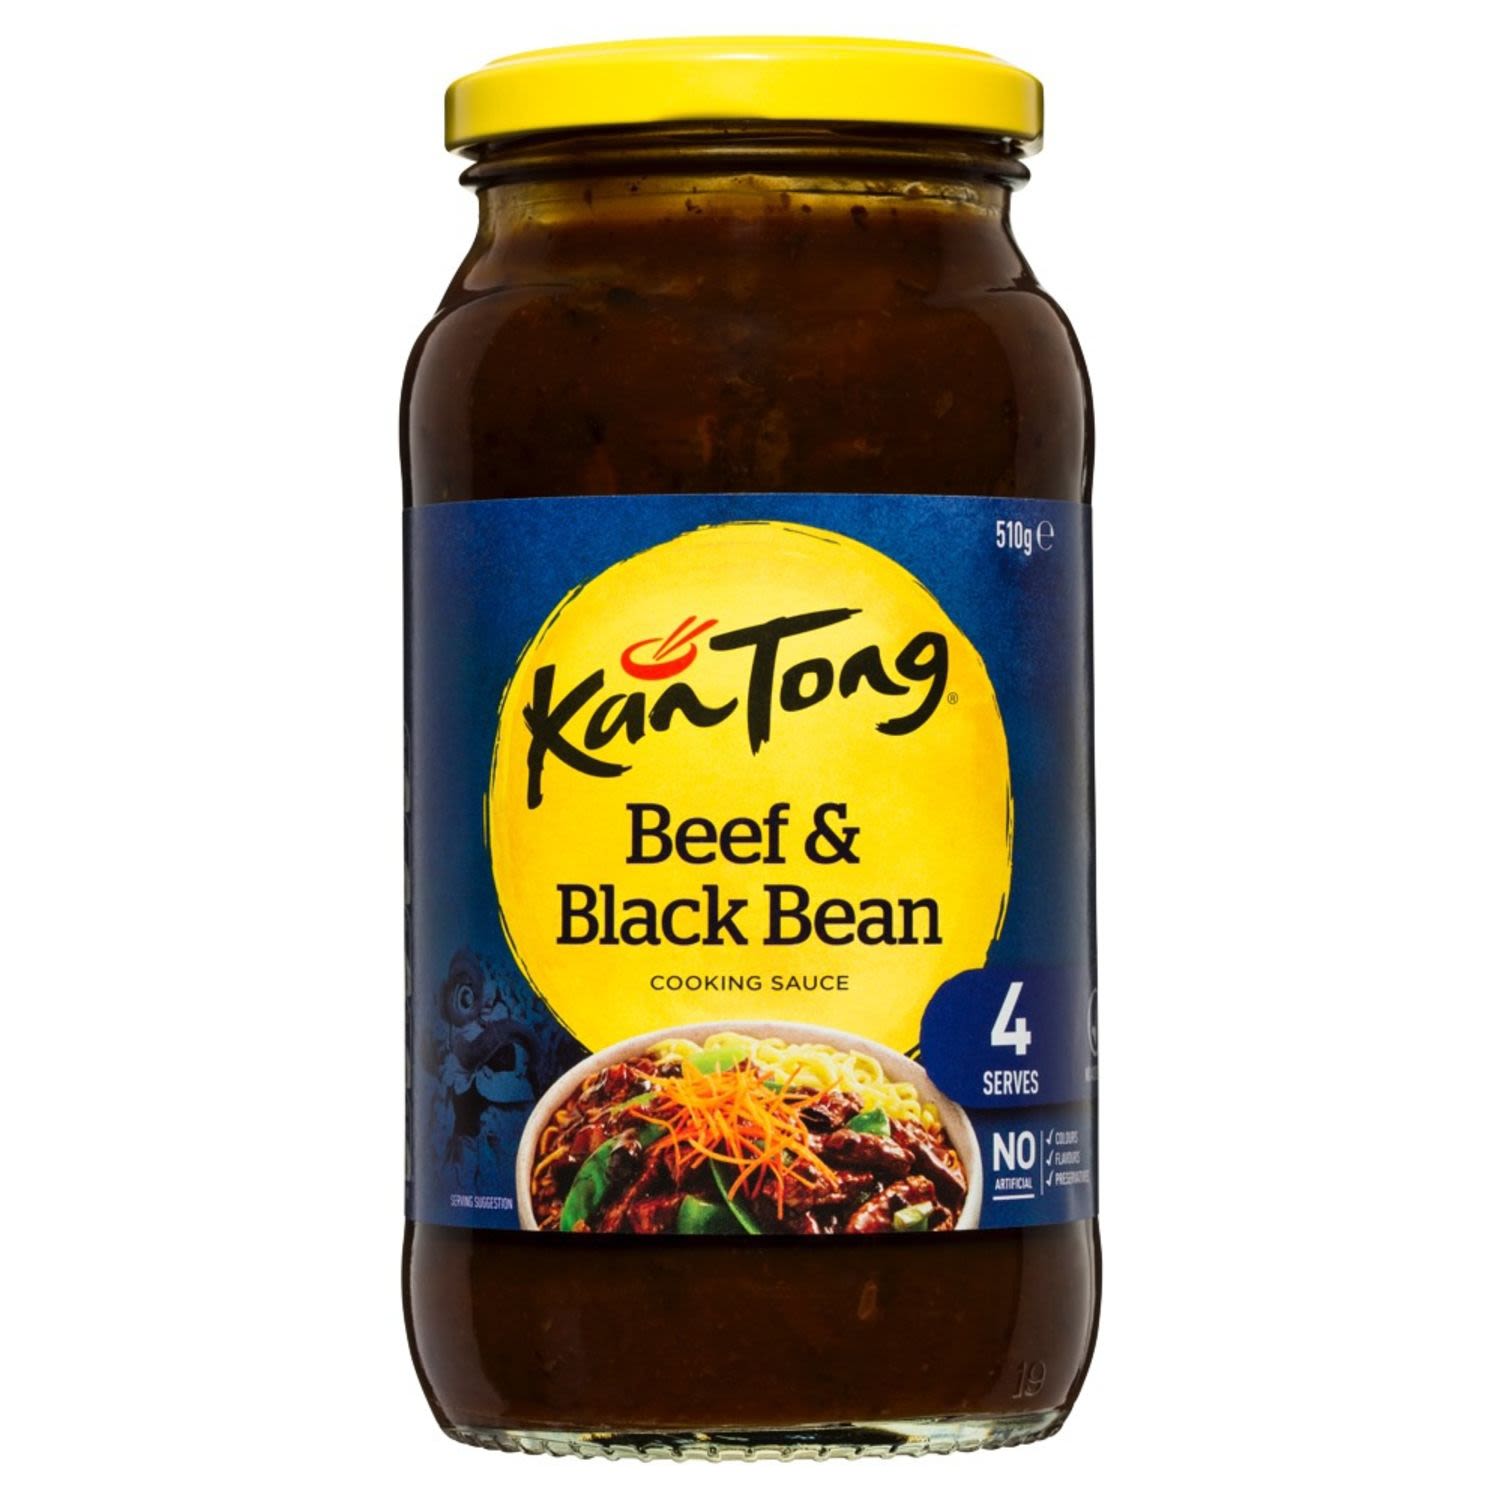 Kan Tong Black Bean Stir Fry Cooking Sauce, 510 Gram